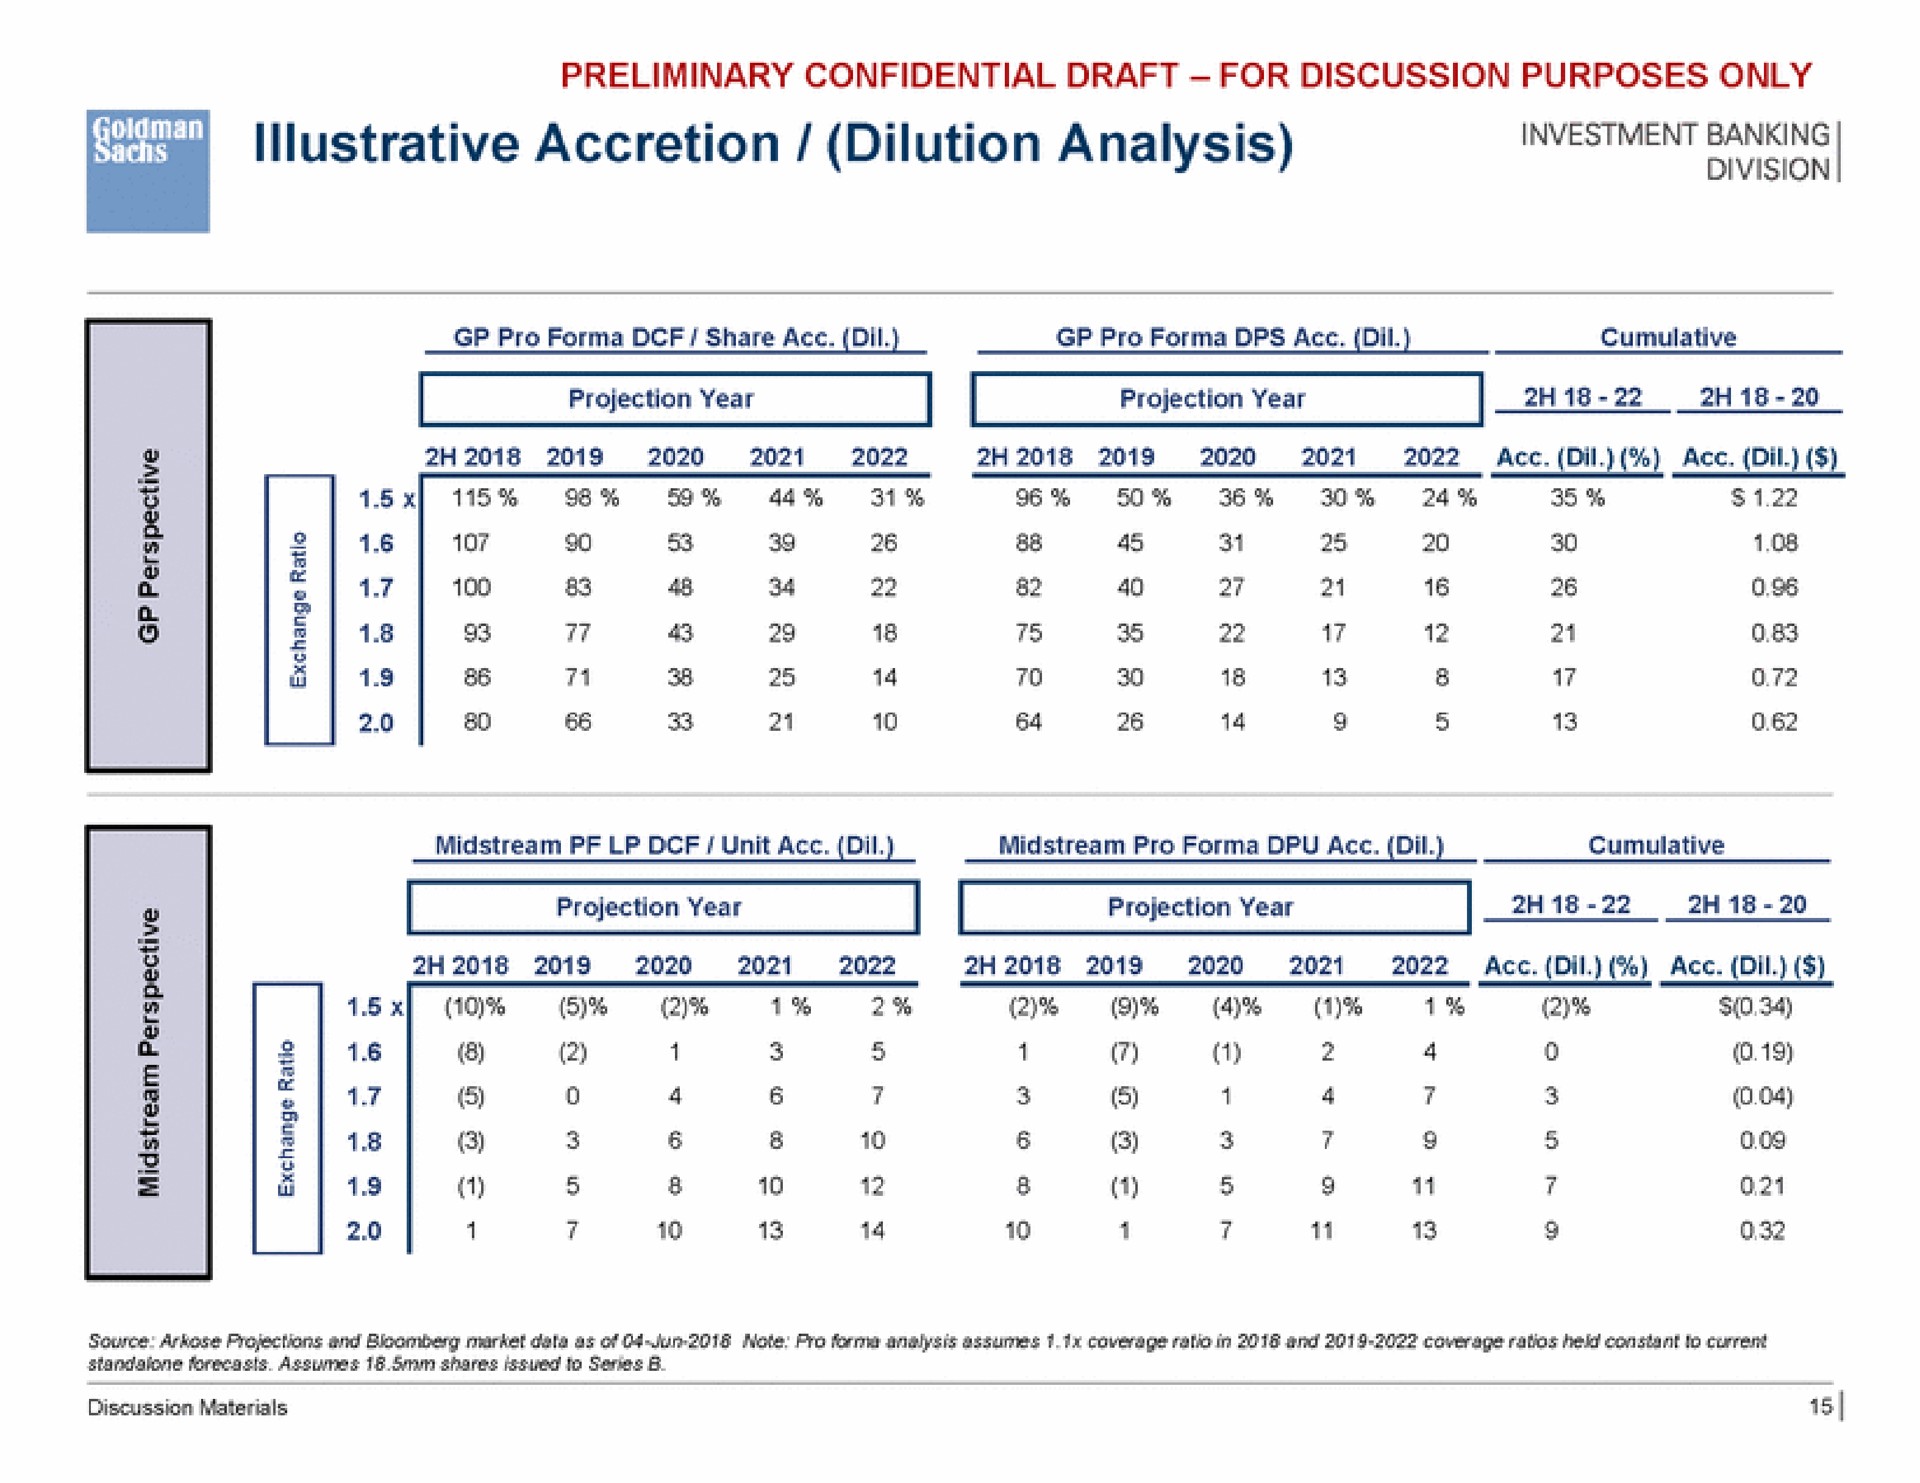 accretion dilution analysis | Goldman Sachs